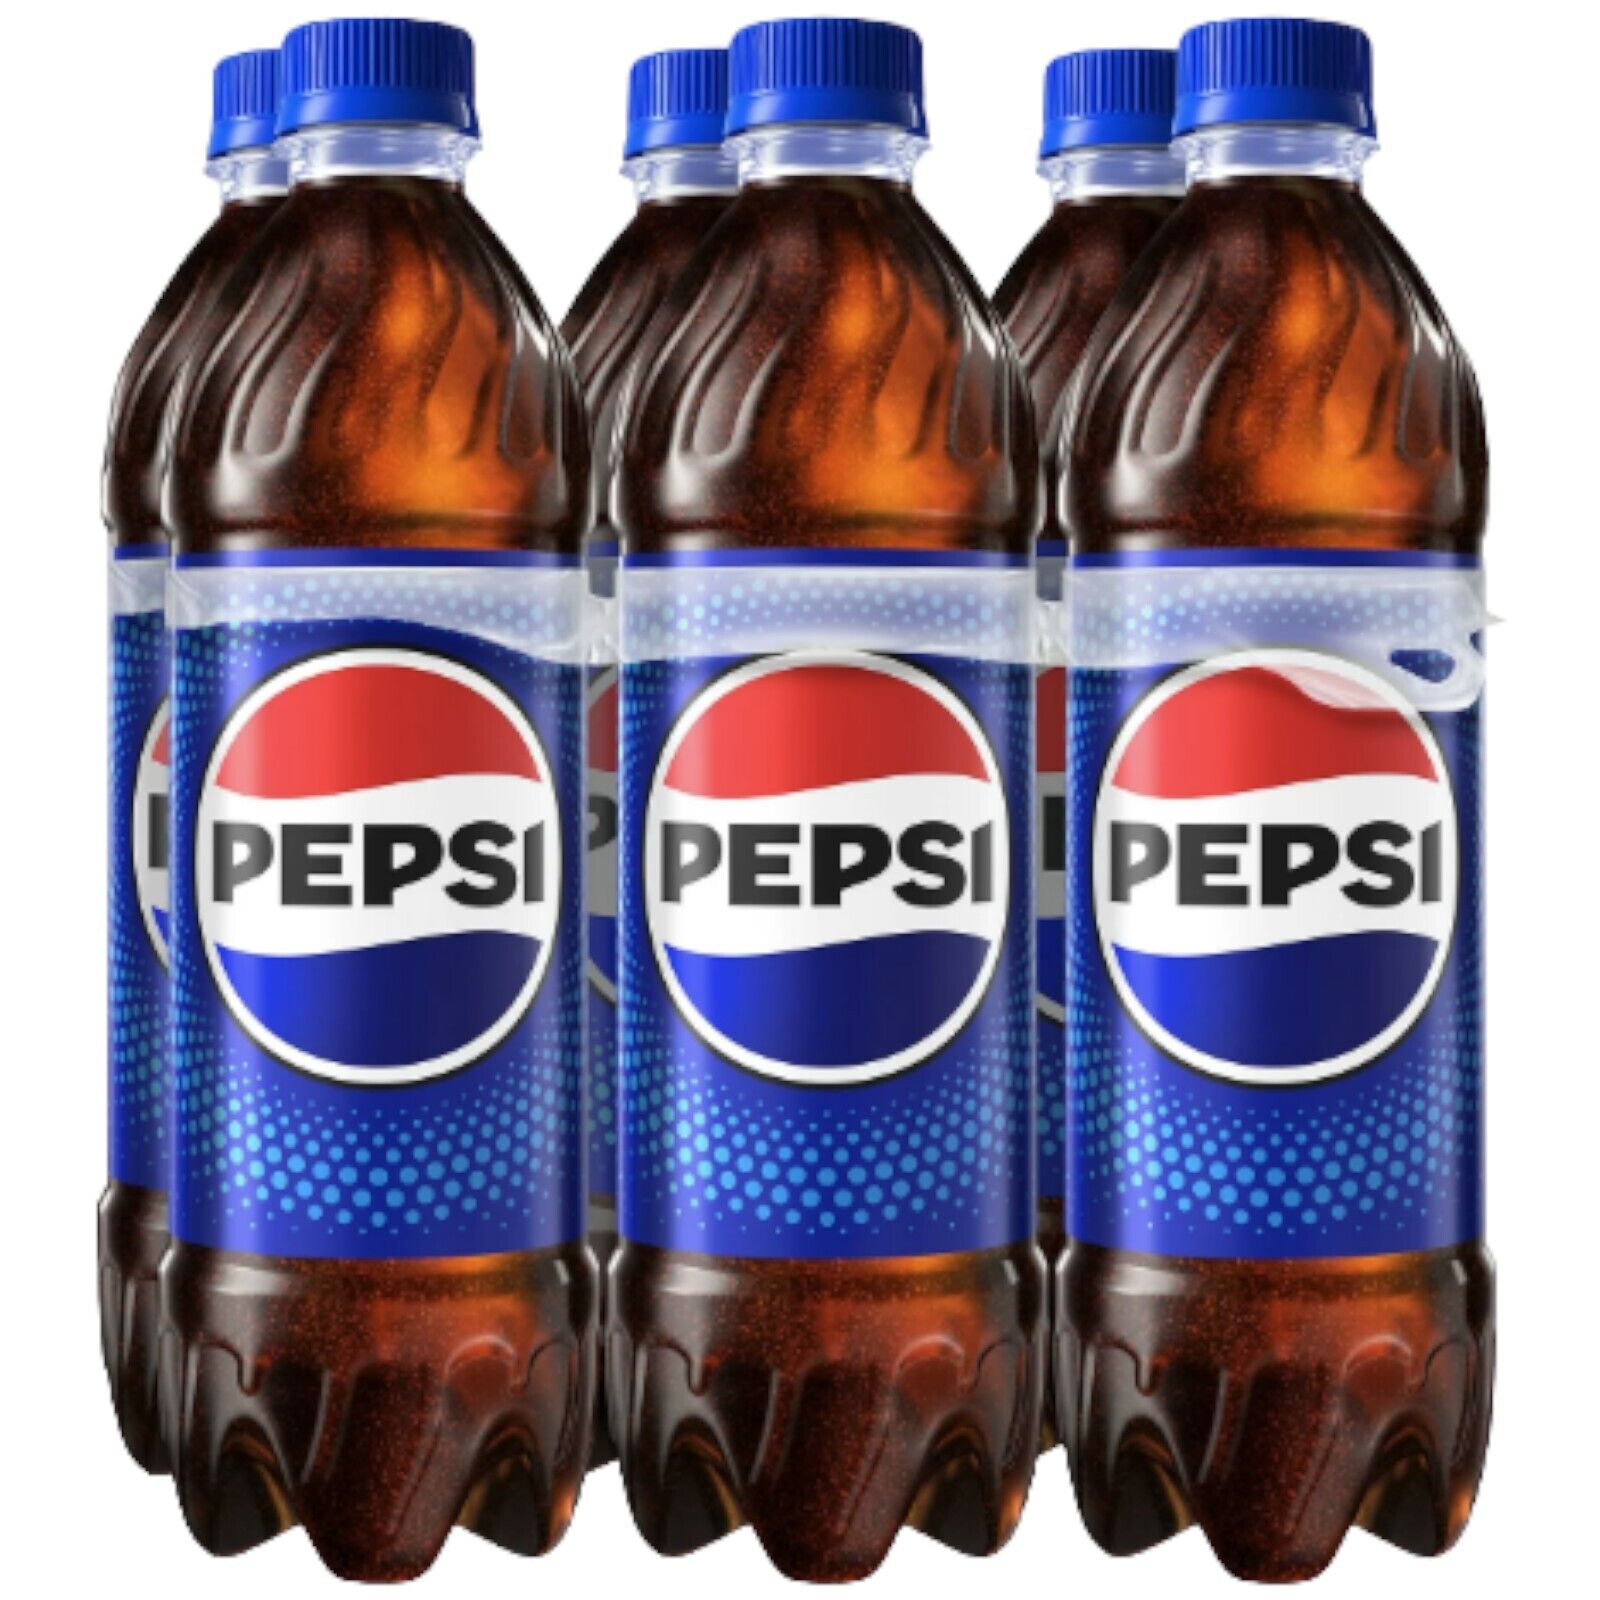 Pick Your Flavor Pepsi Soft Drinks Soda PepsiCo Assorted 6 Pack 16.9oz Bottles